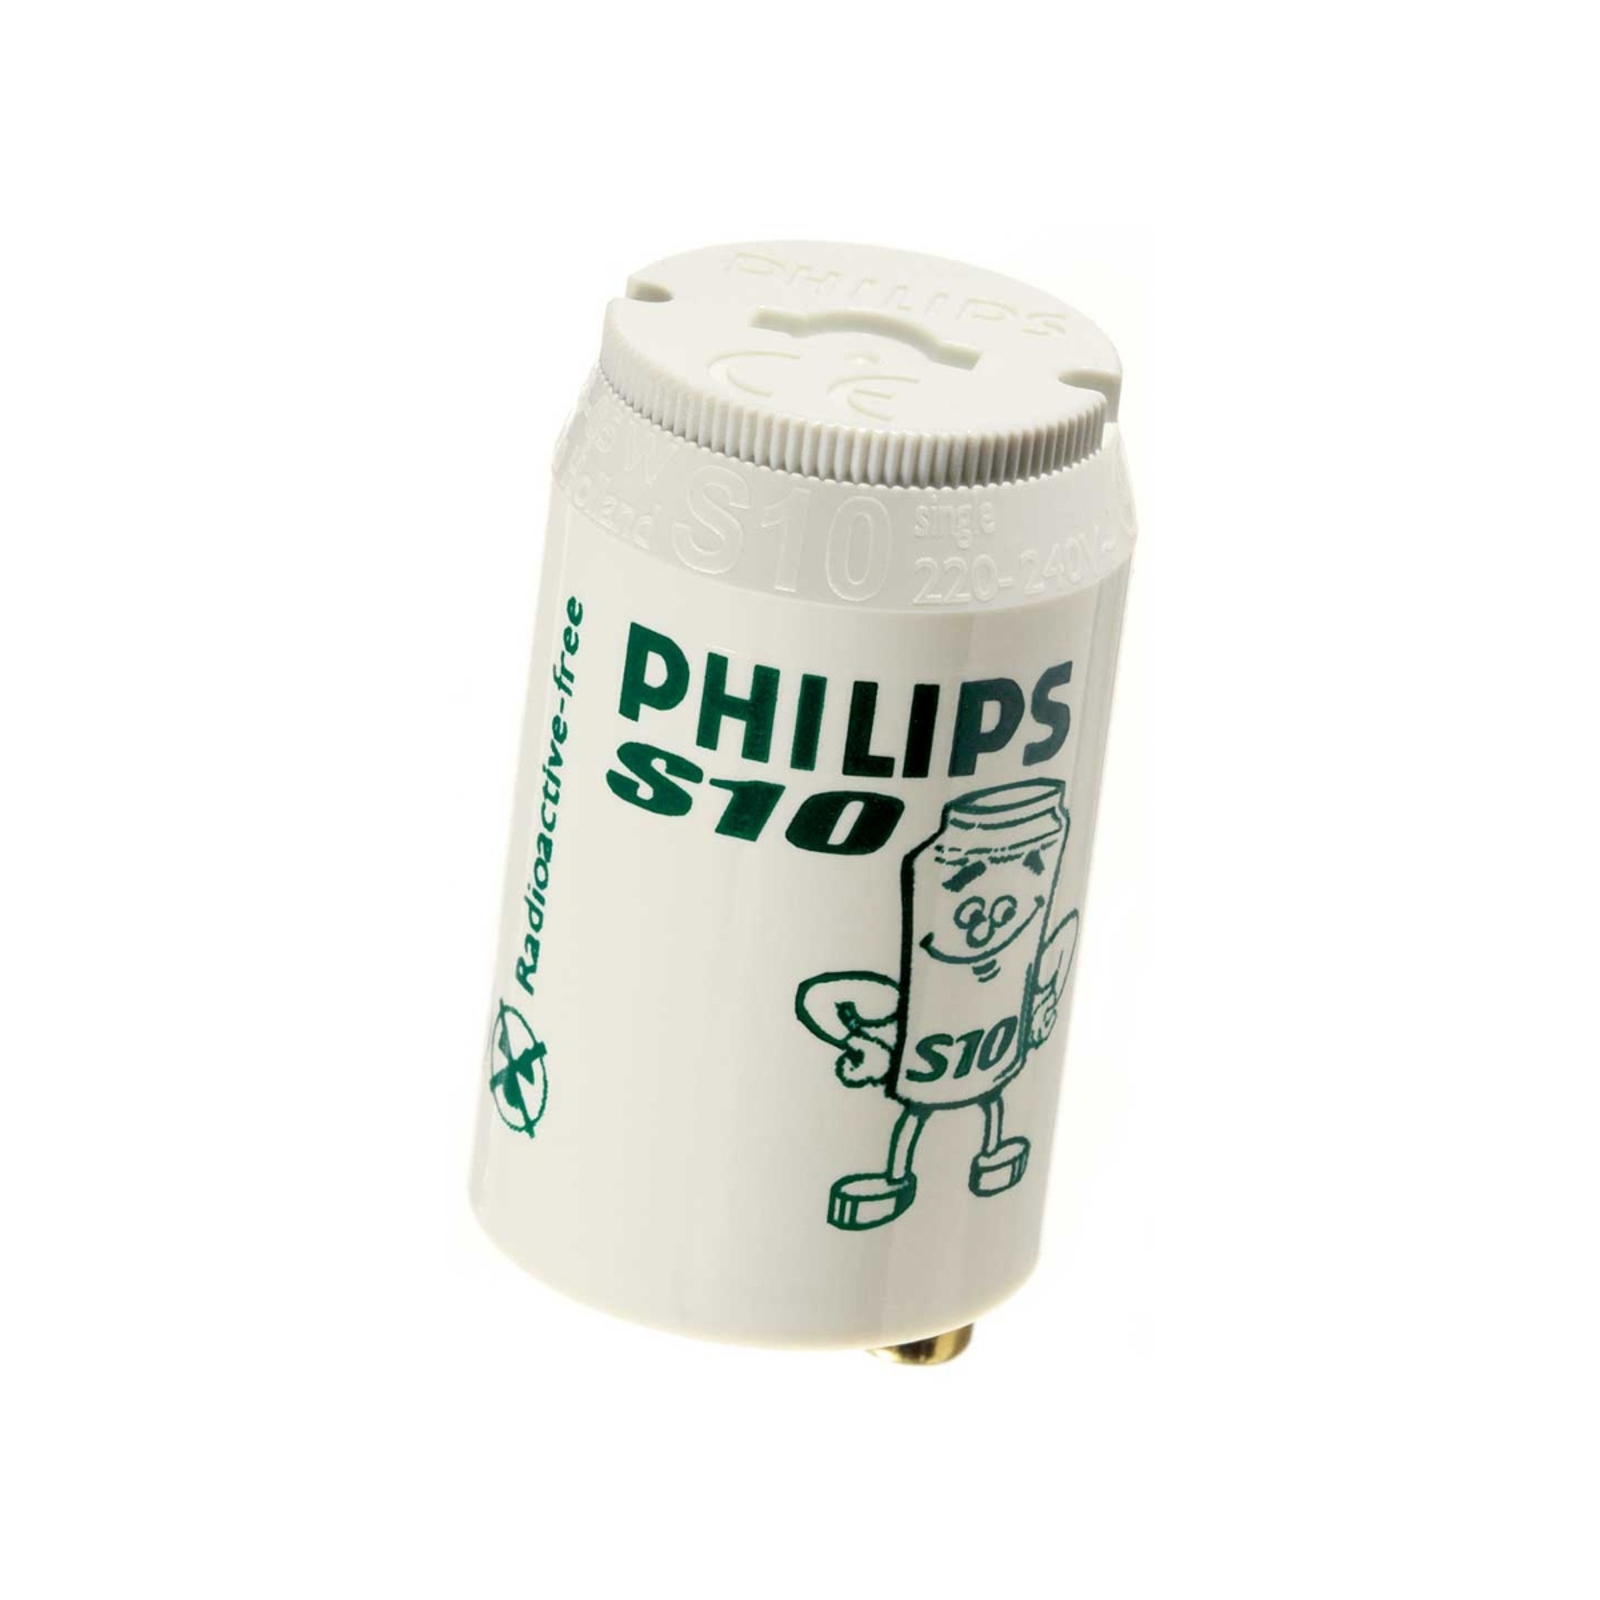 Starter pour tube fluorescent S10 4-65W Philips